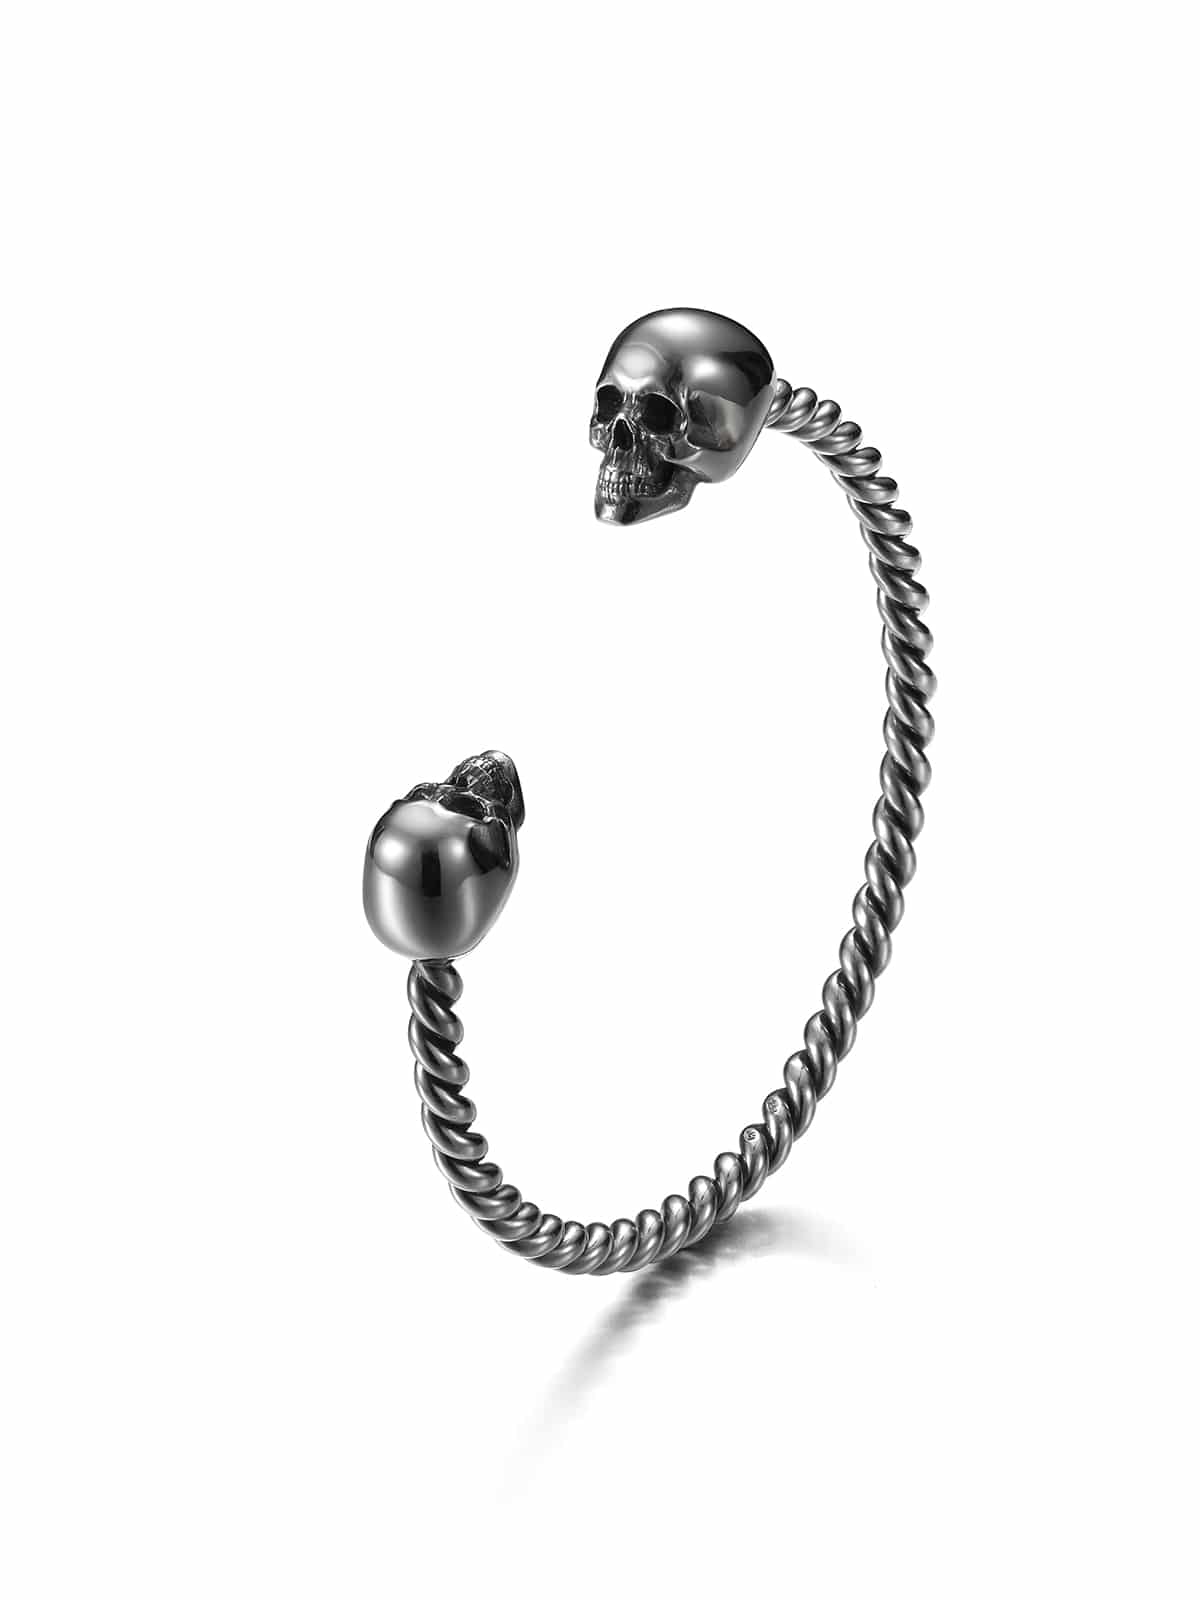 Twisted Skull cuff bracelet